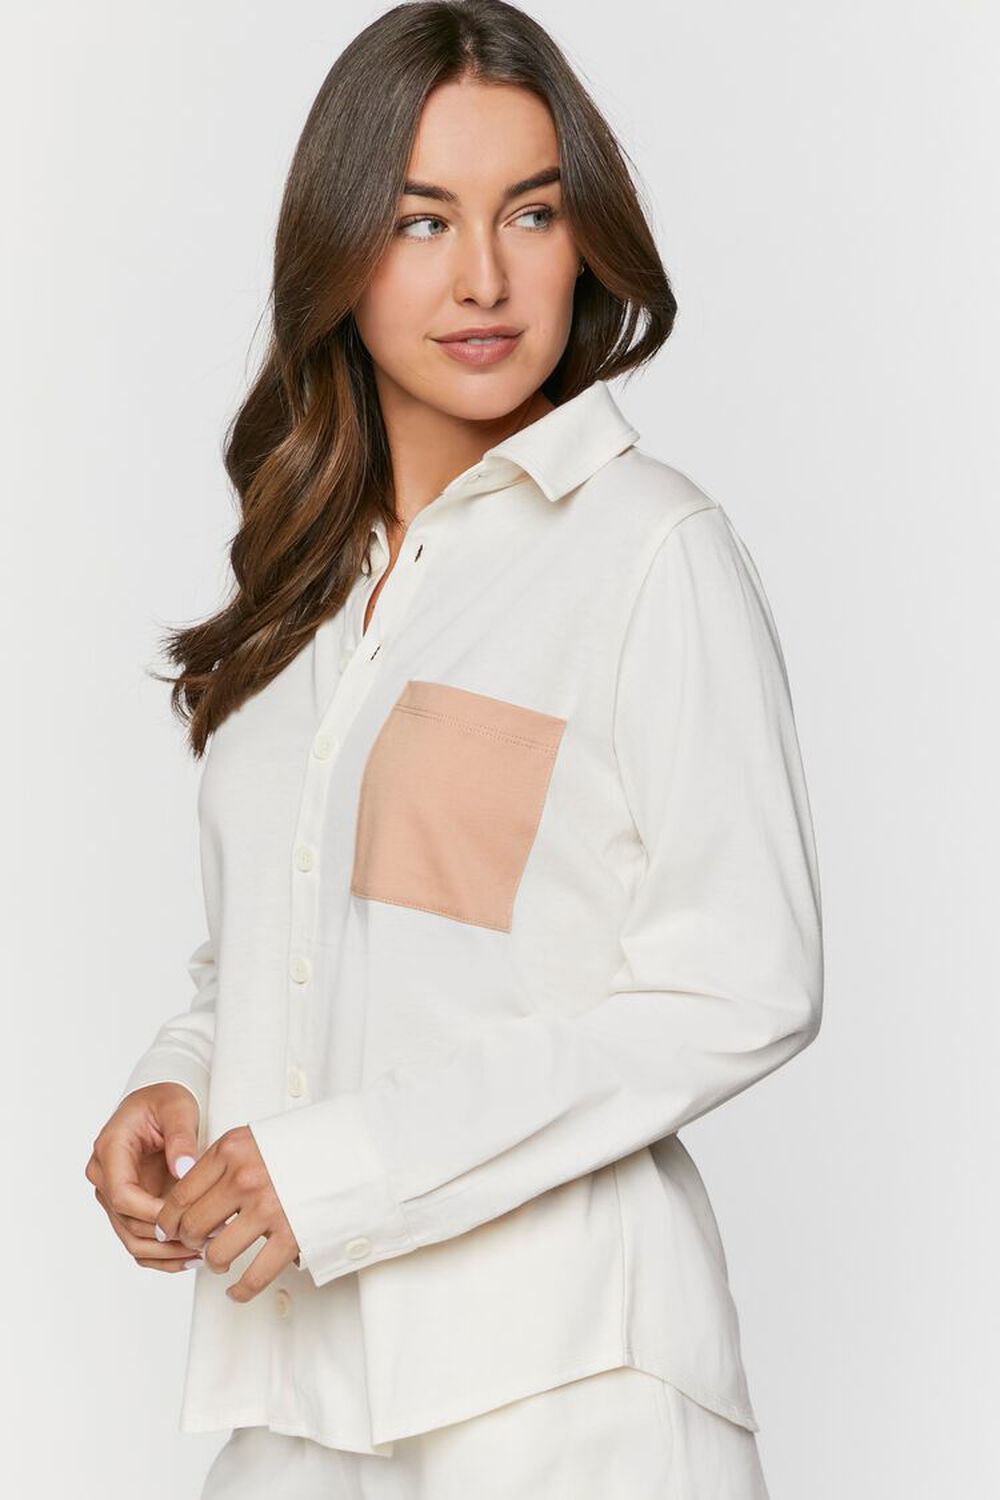 TAN/WHITE Colorblock Patch-Pocket Pajama Shirt, image 2